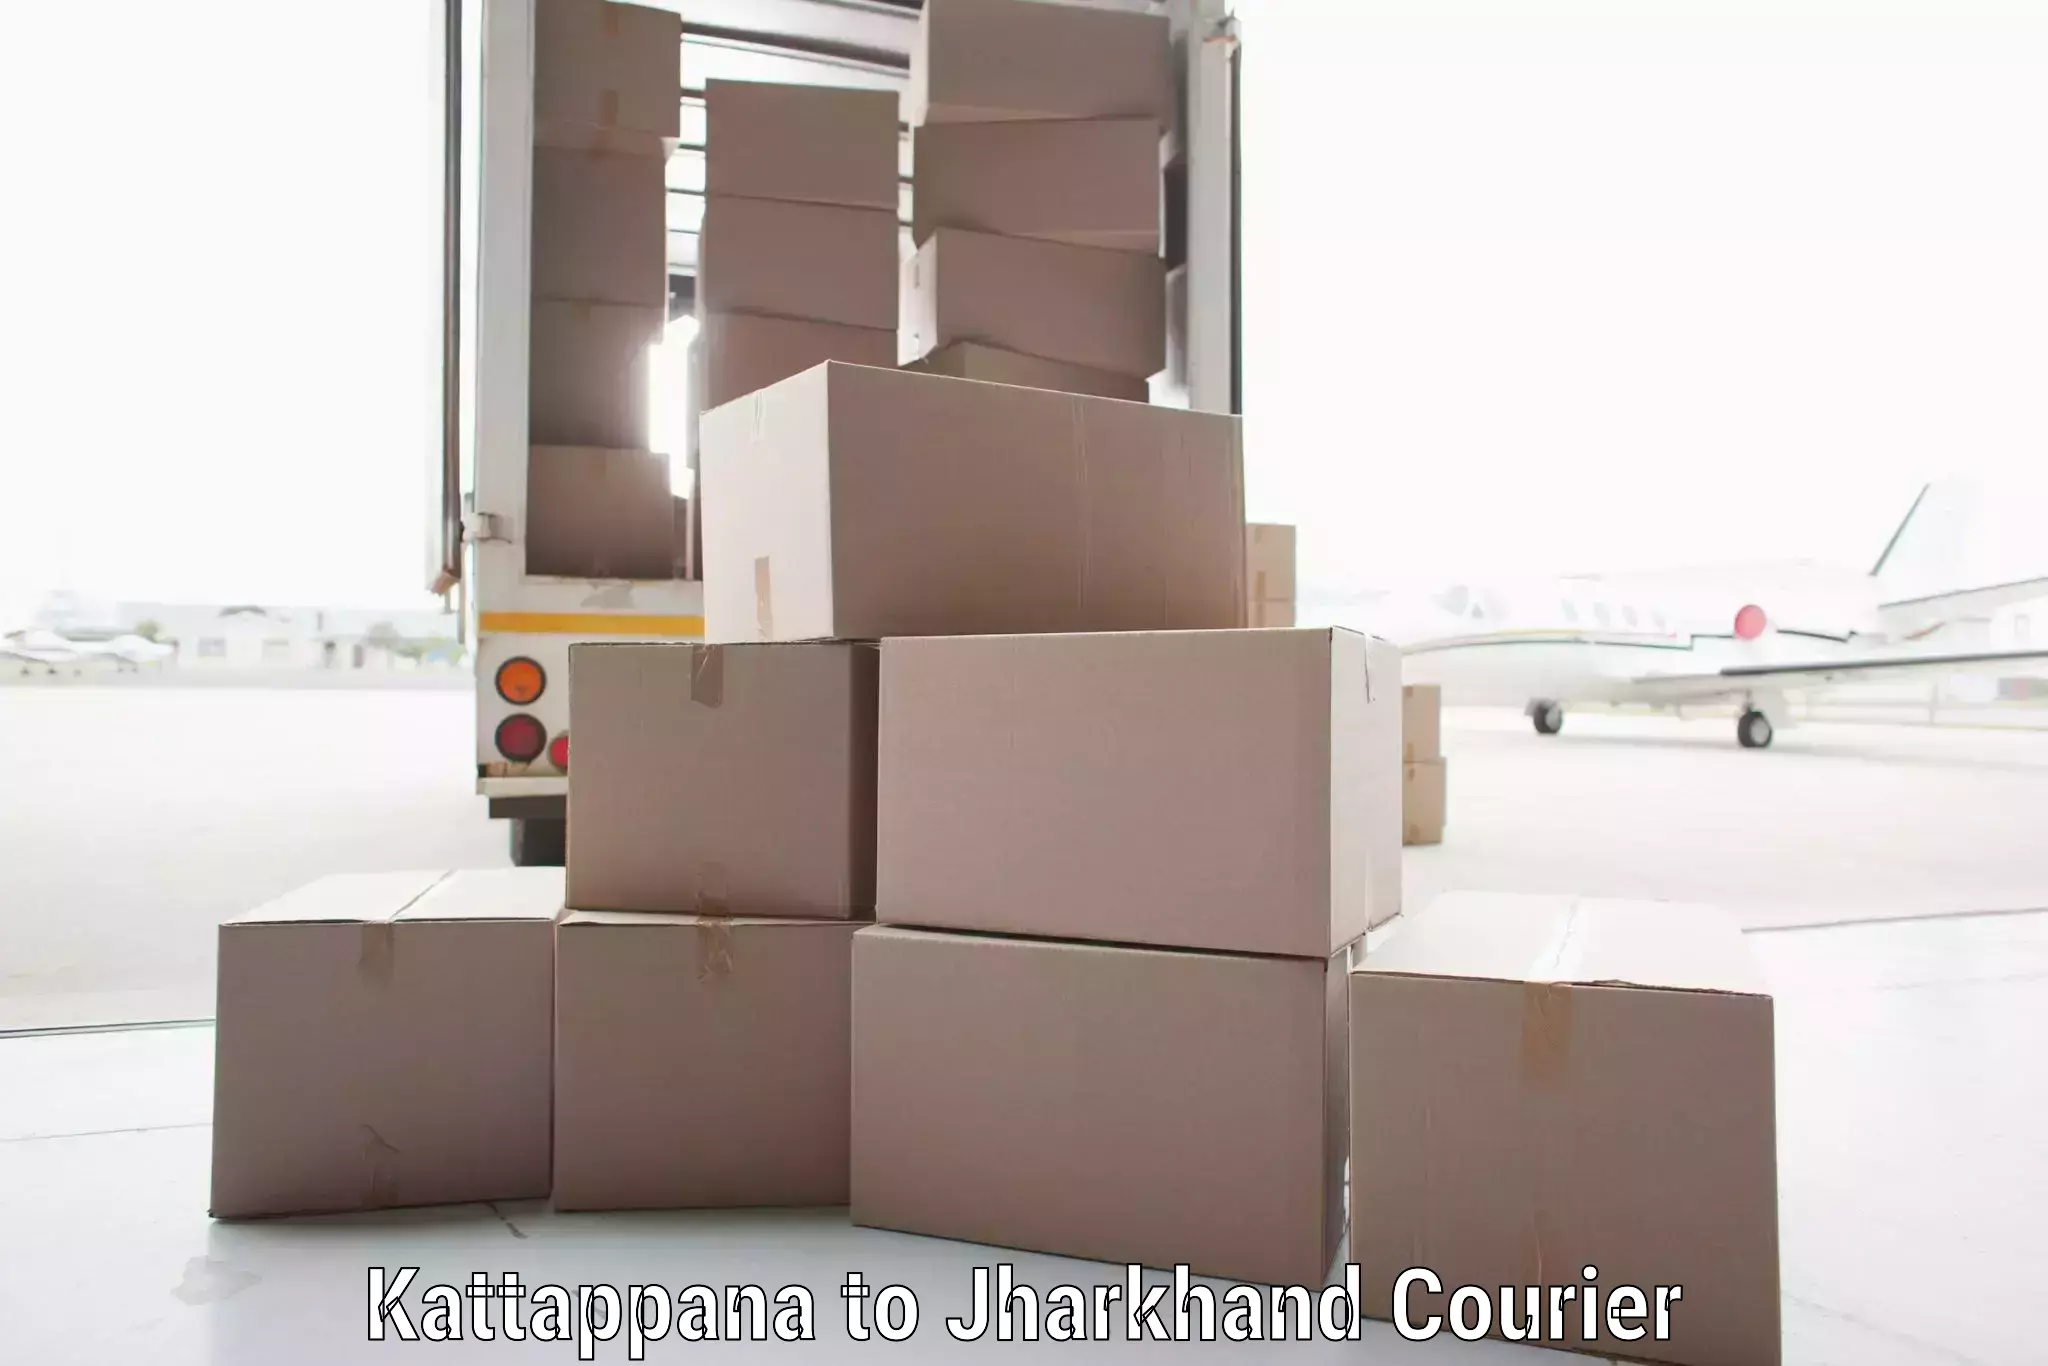 Package delivery network Kattappana to Shikaripara